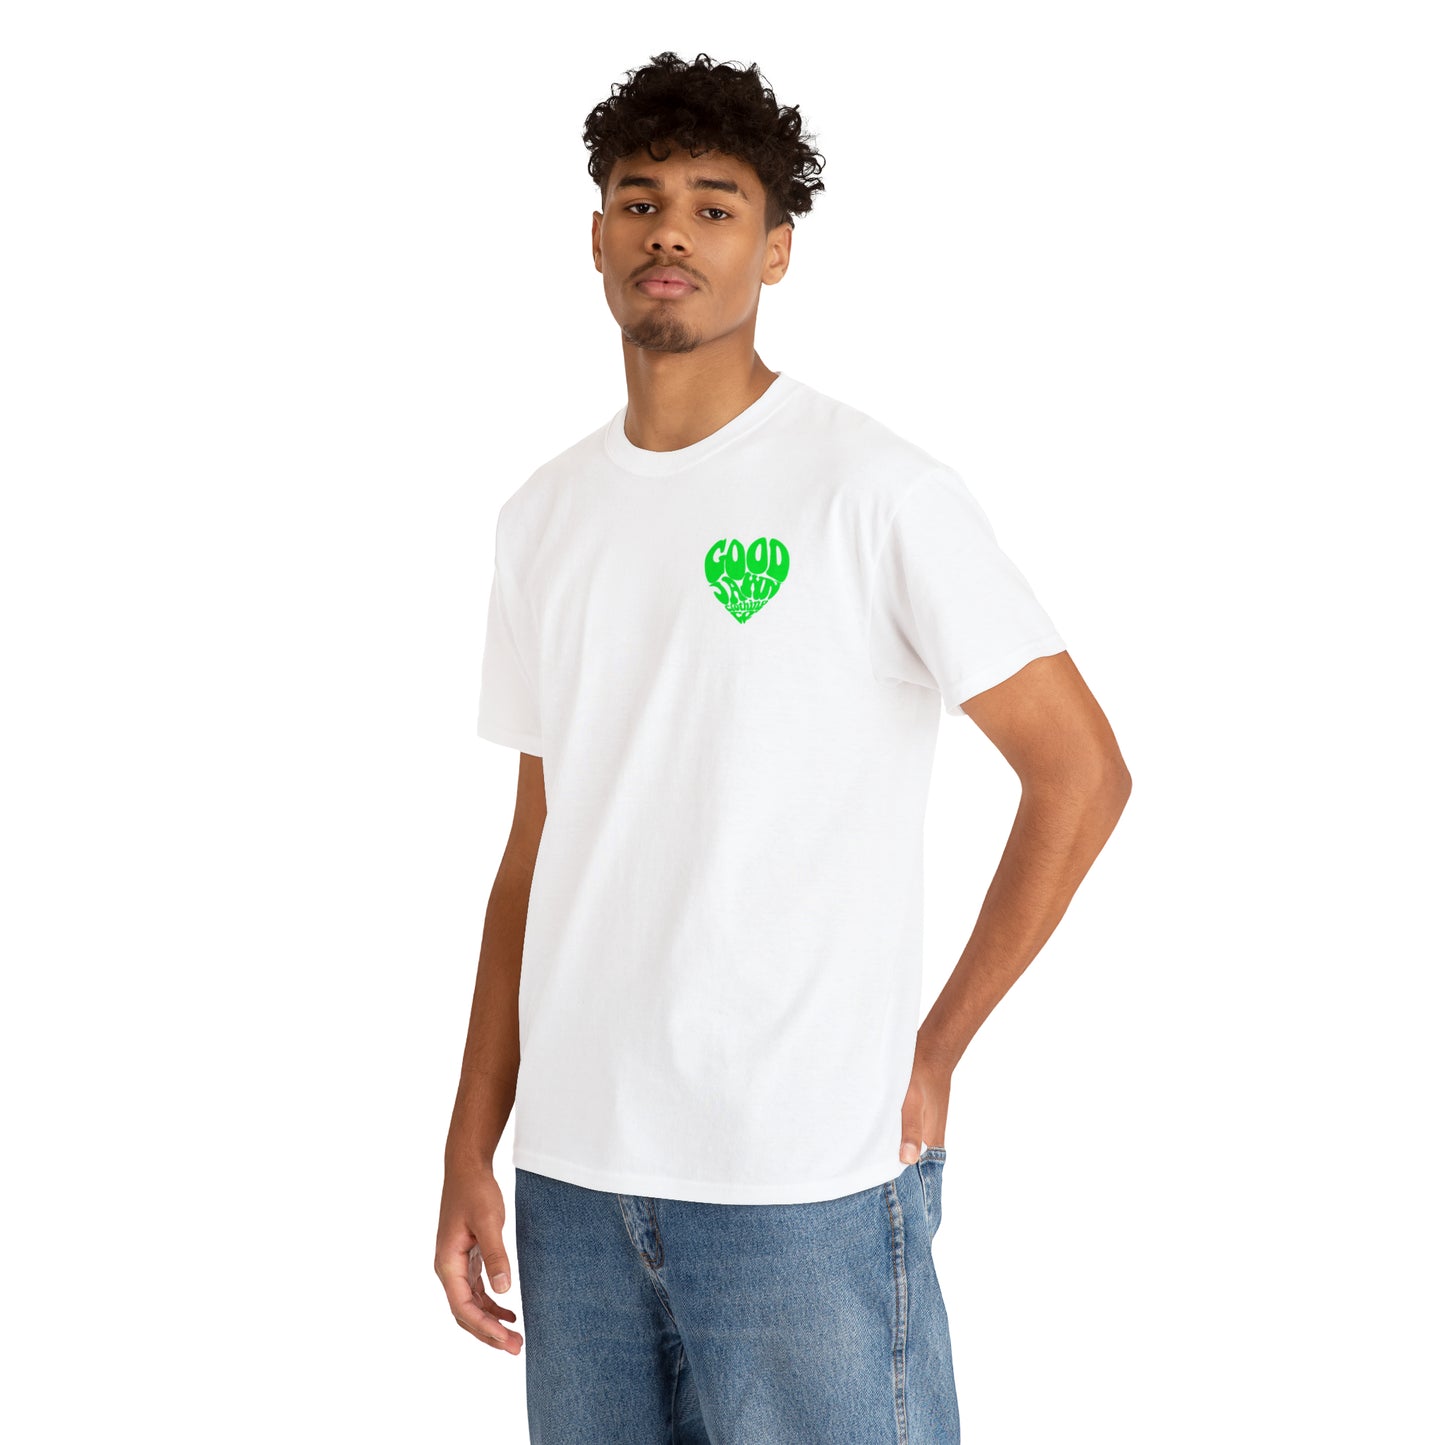 GOOD Heart TEE (Neon Green)